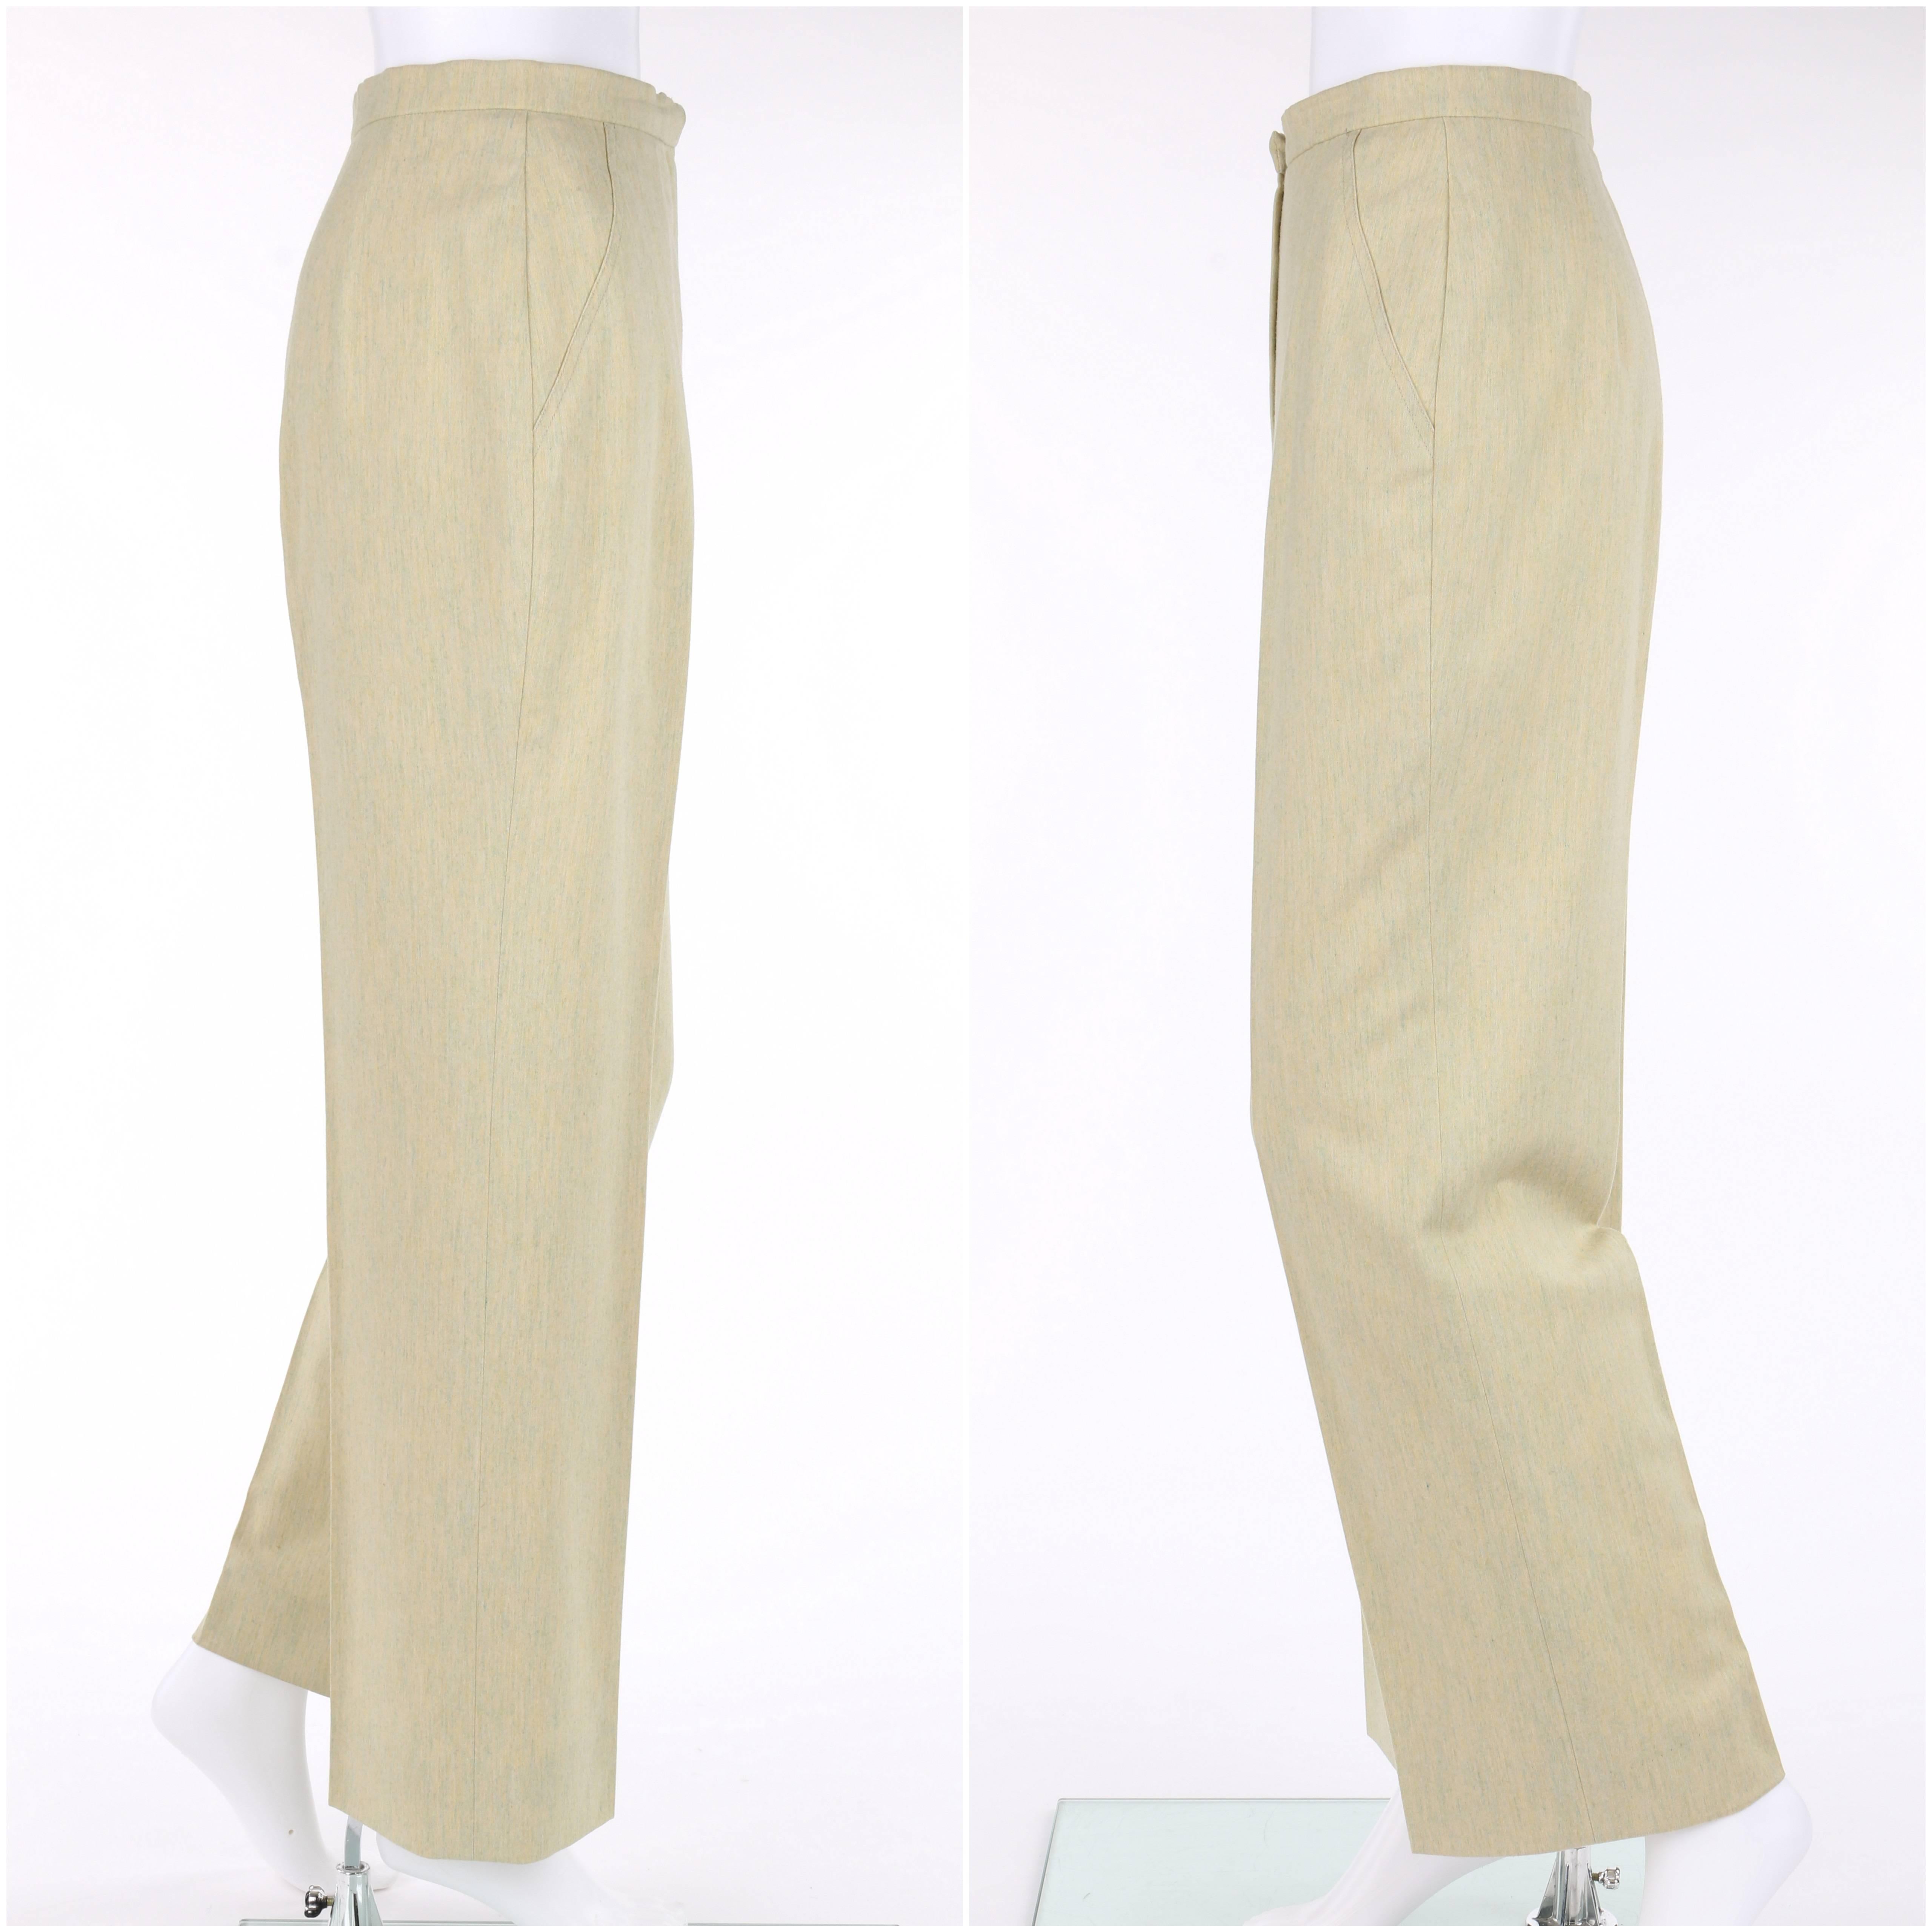 GIVENCHY Couture A/W 1998 ALEXANDER McQUEEN 3 Pc Suit Jacket Skirt Pants Set 2